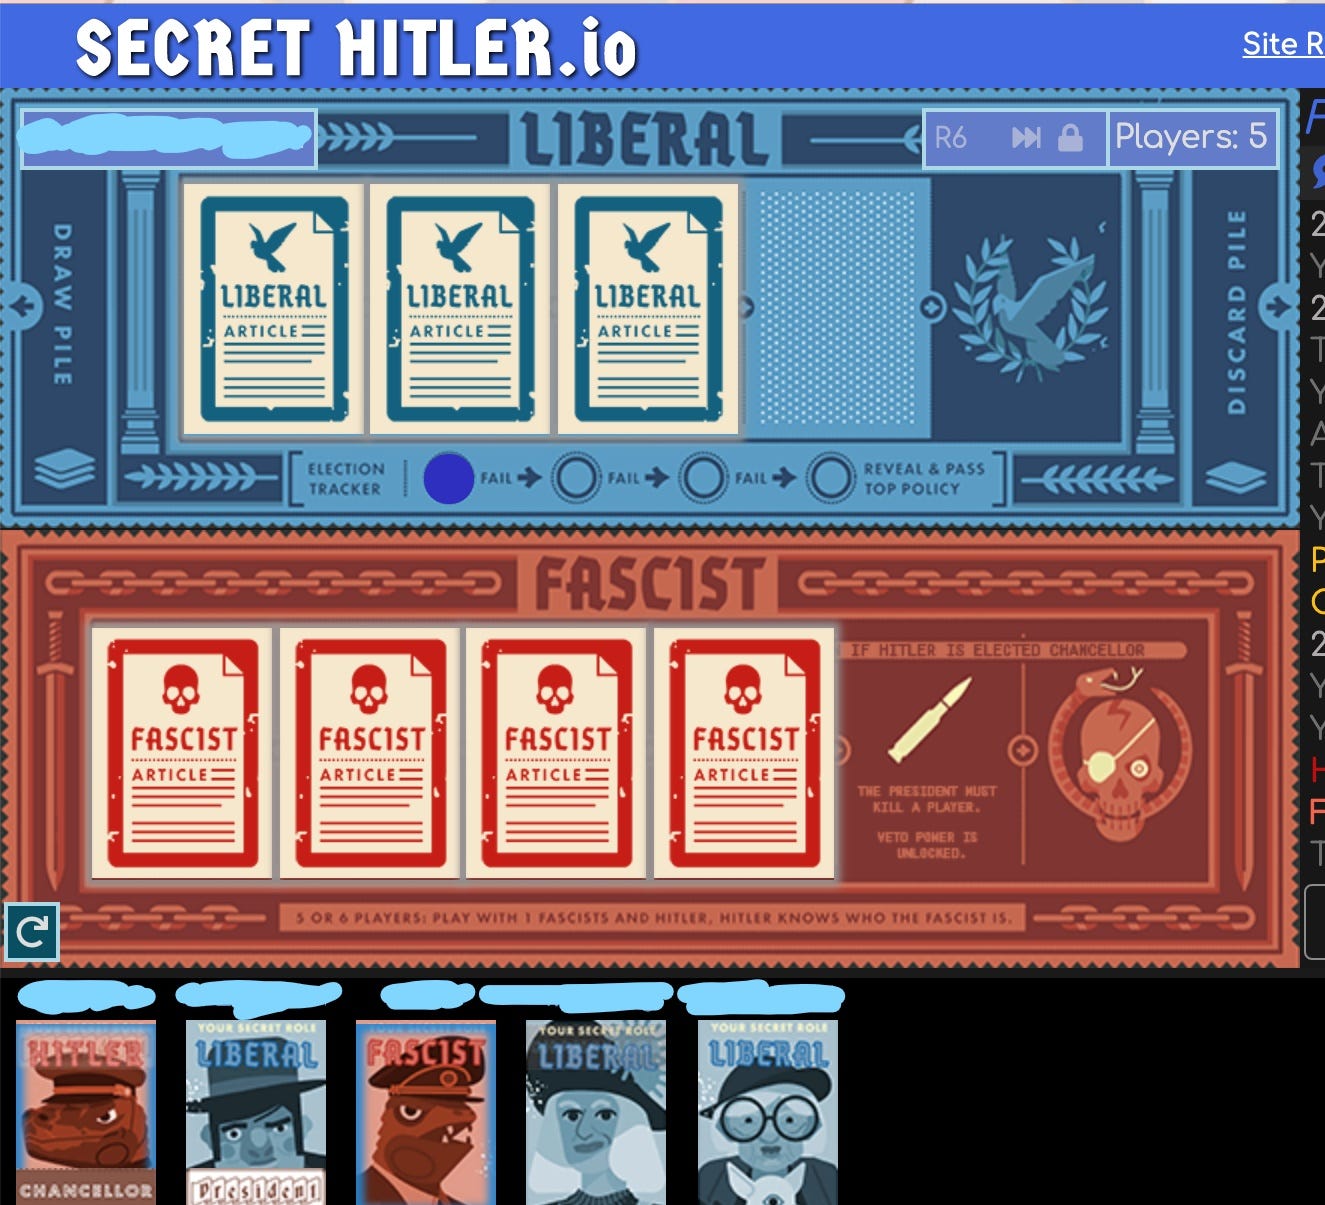 Critical Play: Secret Hitler. A Comparative Analysis